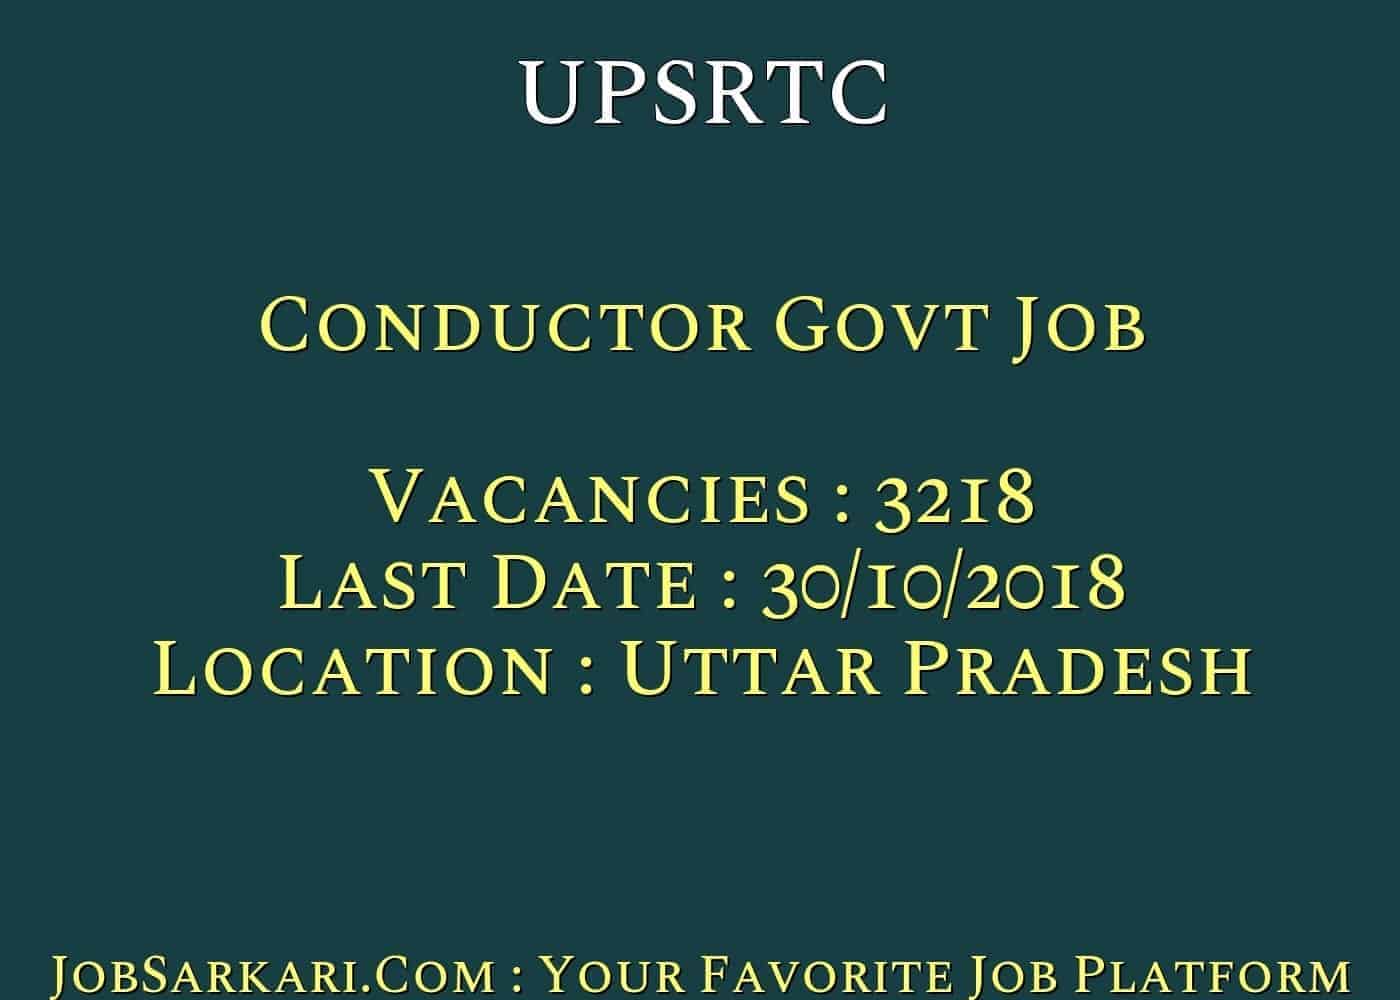 UPSRTC Recruitment 2018 for Conductor Govt Job